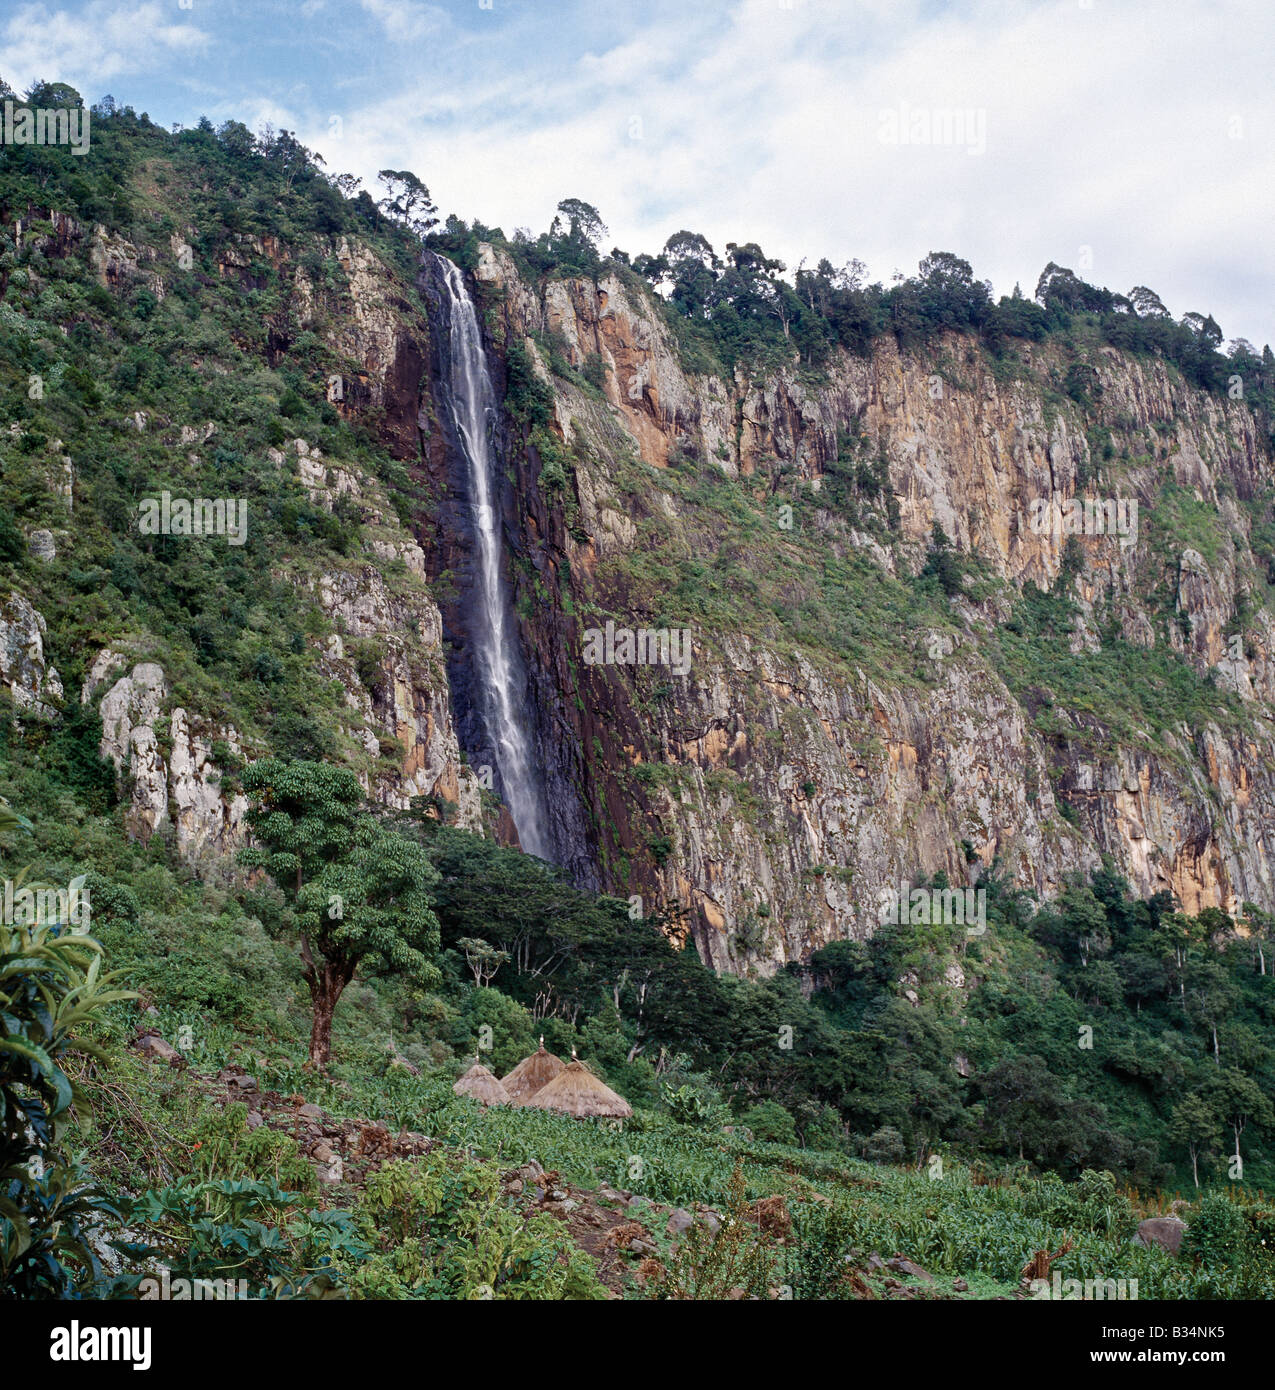 Kenya, Rift Valley Province, Keiyo Escarpment. The Torok River cascades over the western scarp of Africa's Great Rift Valley Stock Photo